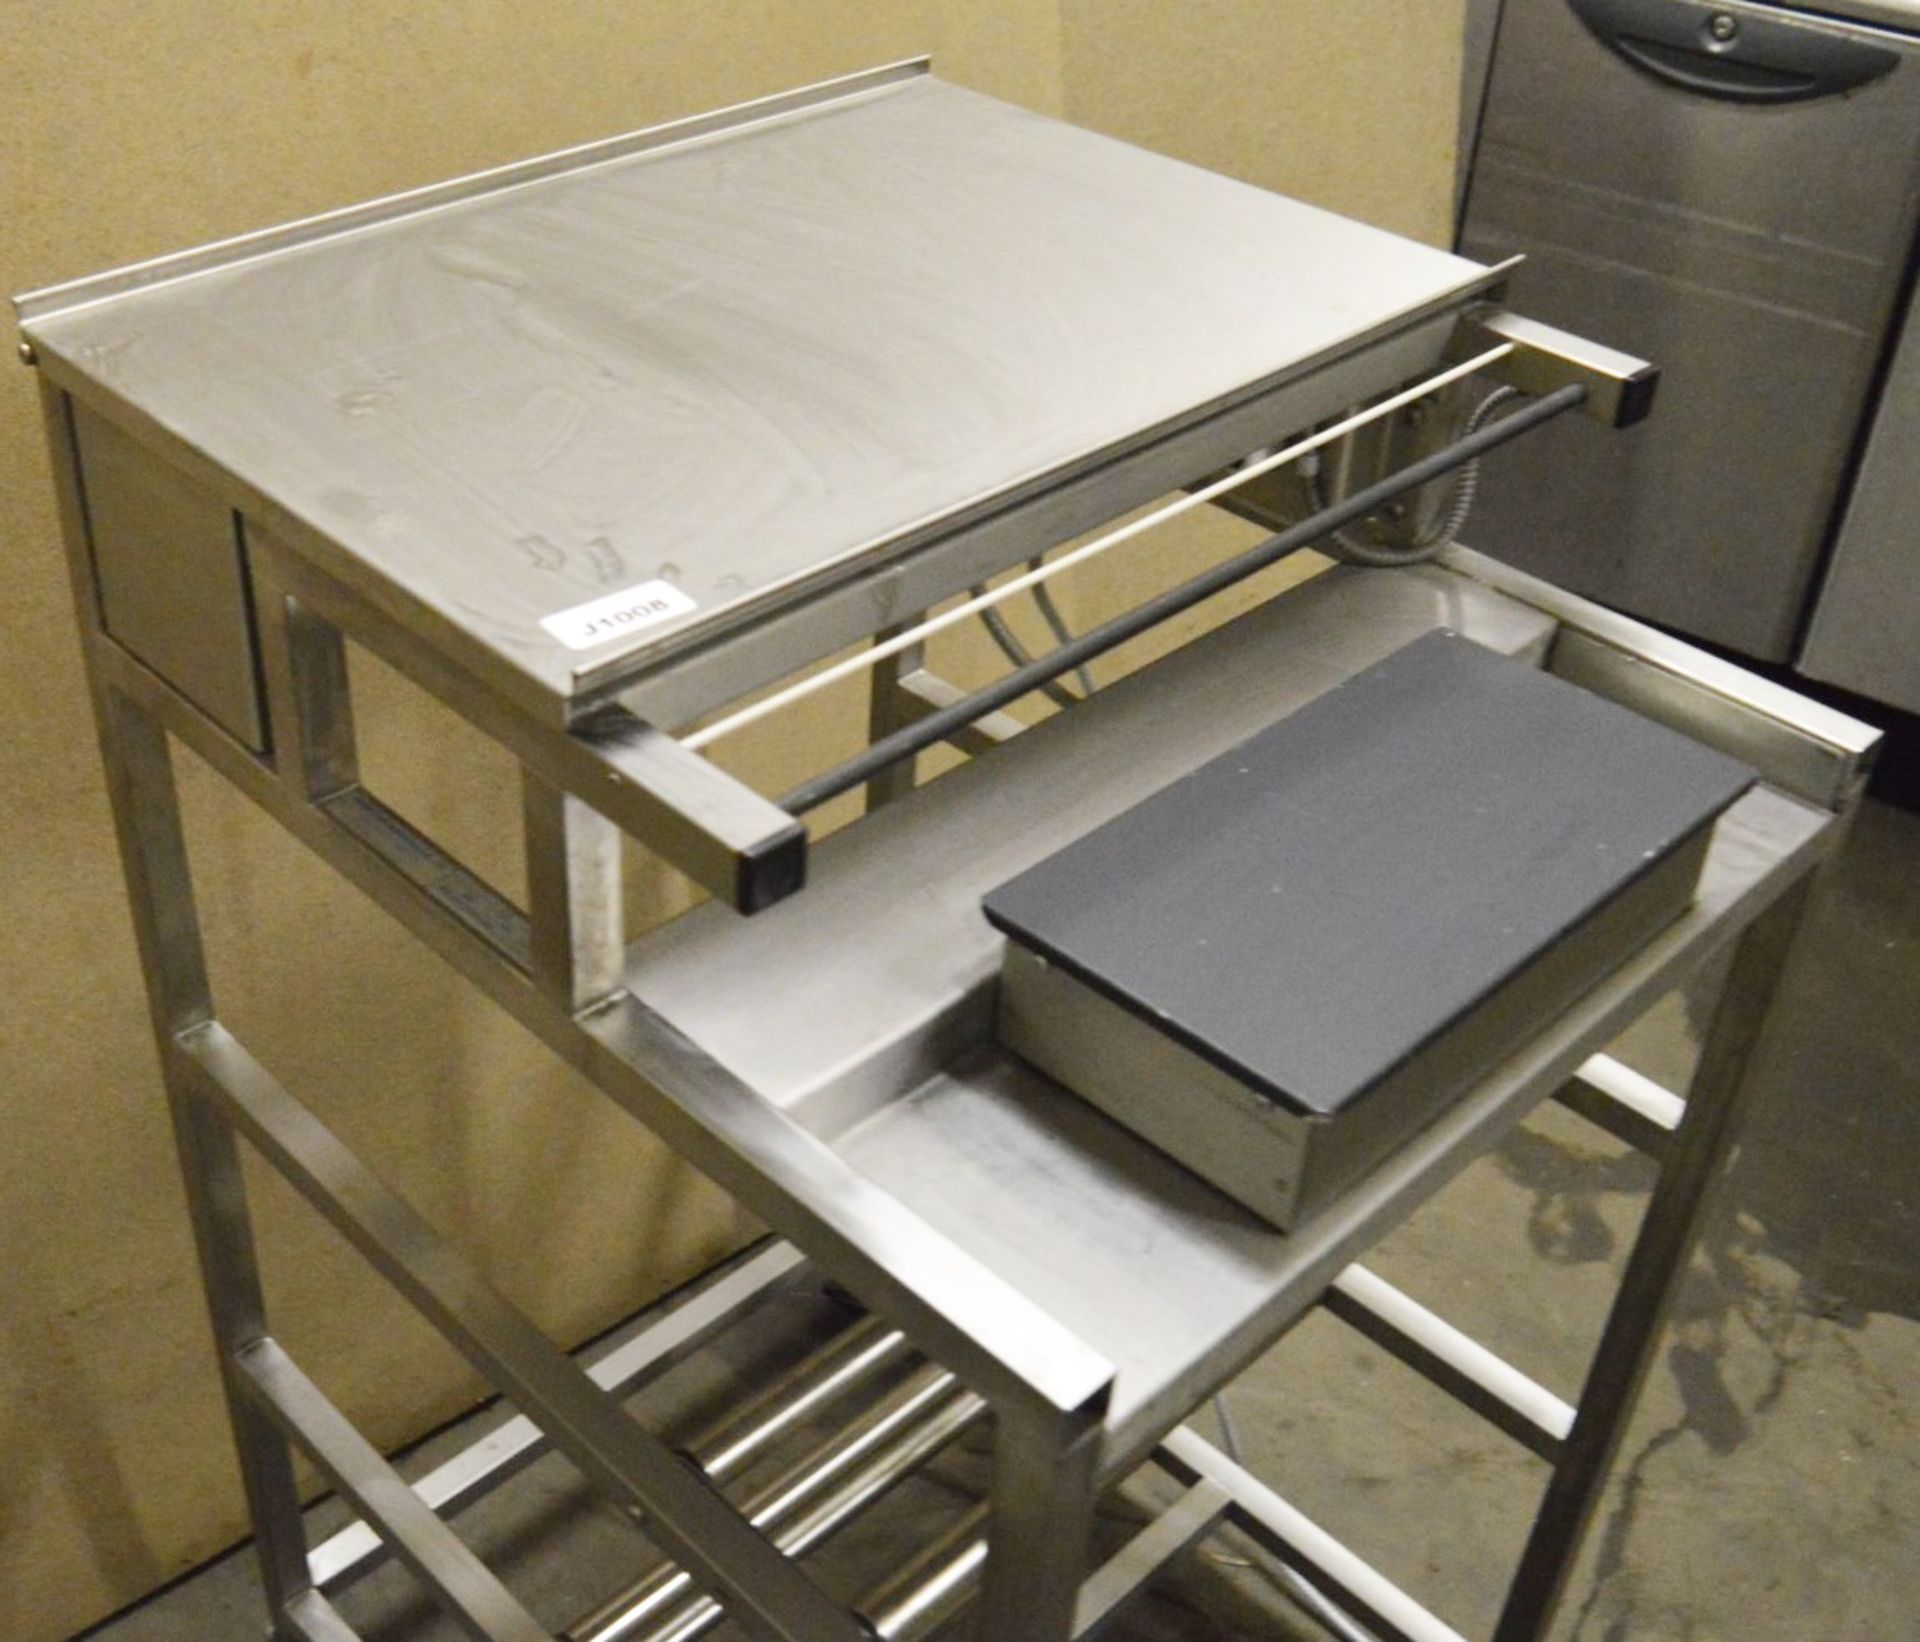 1 x Metalcraft 240v Food Tray Sealer - H98 x W56 x D61 cms - CL282 - Ref J1008 - Location: Bolton - Image 2 of 6